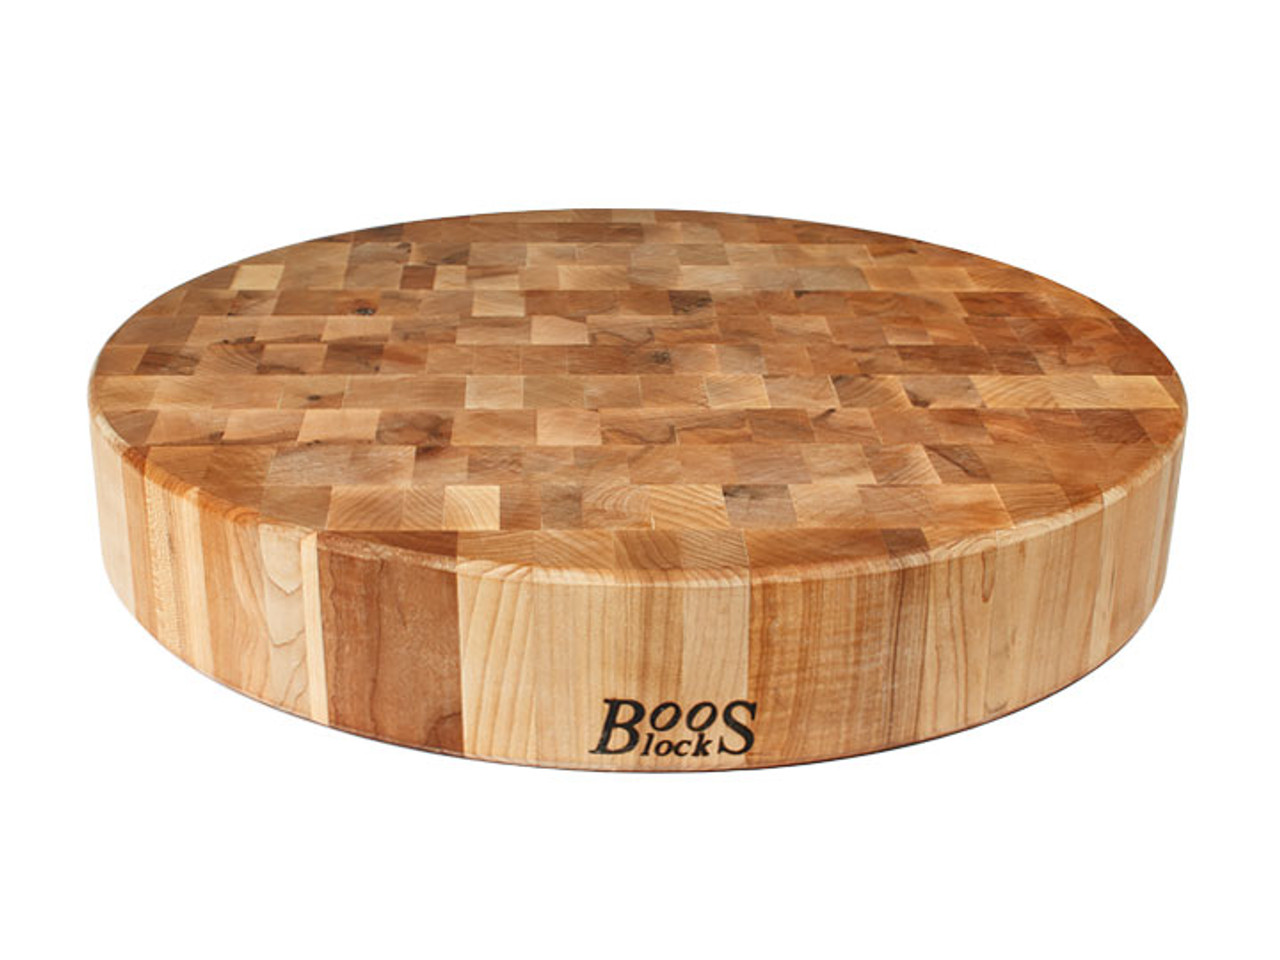 John Boos 214-6 Chop-N-Slice Maple Cutting Board 20 x 15